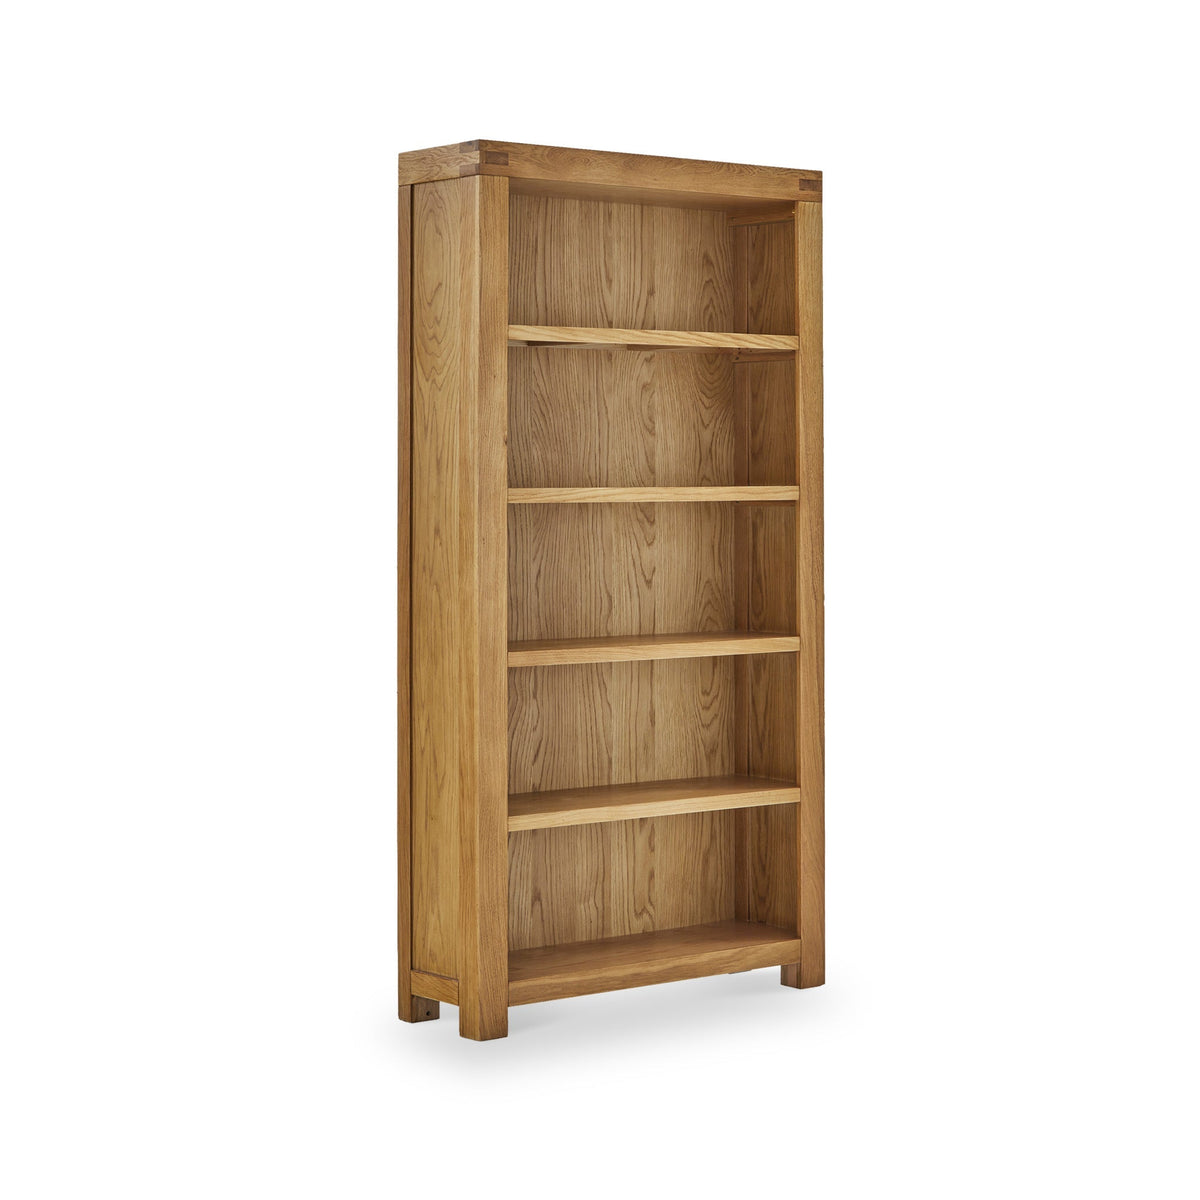 Abbey Grande Large Wide Oak Bookcase from Roseland Furniture